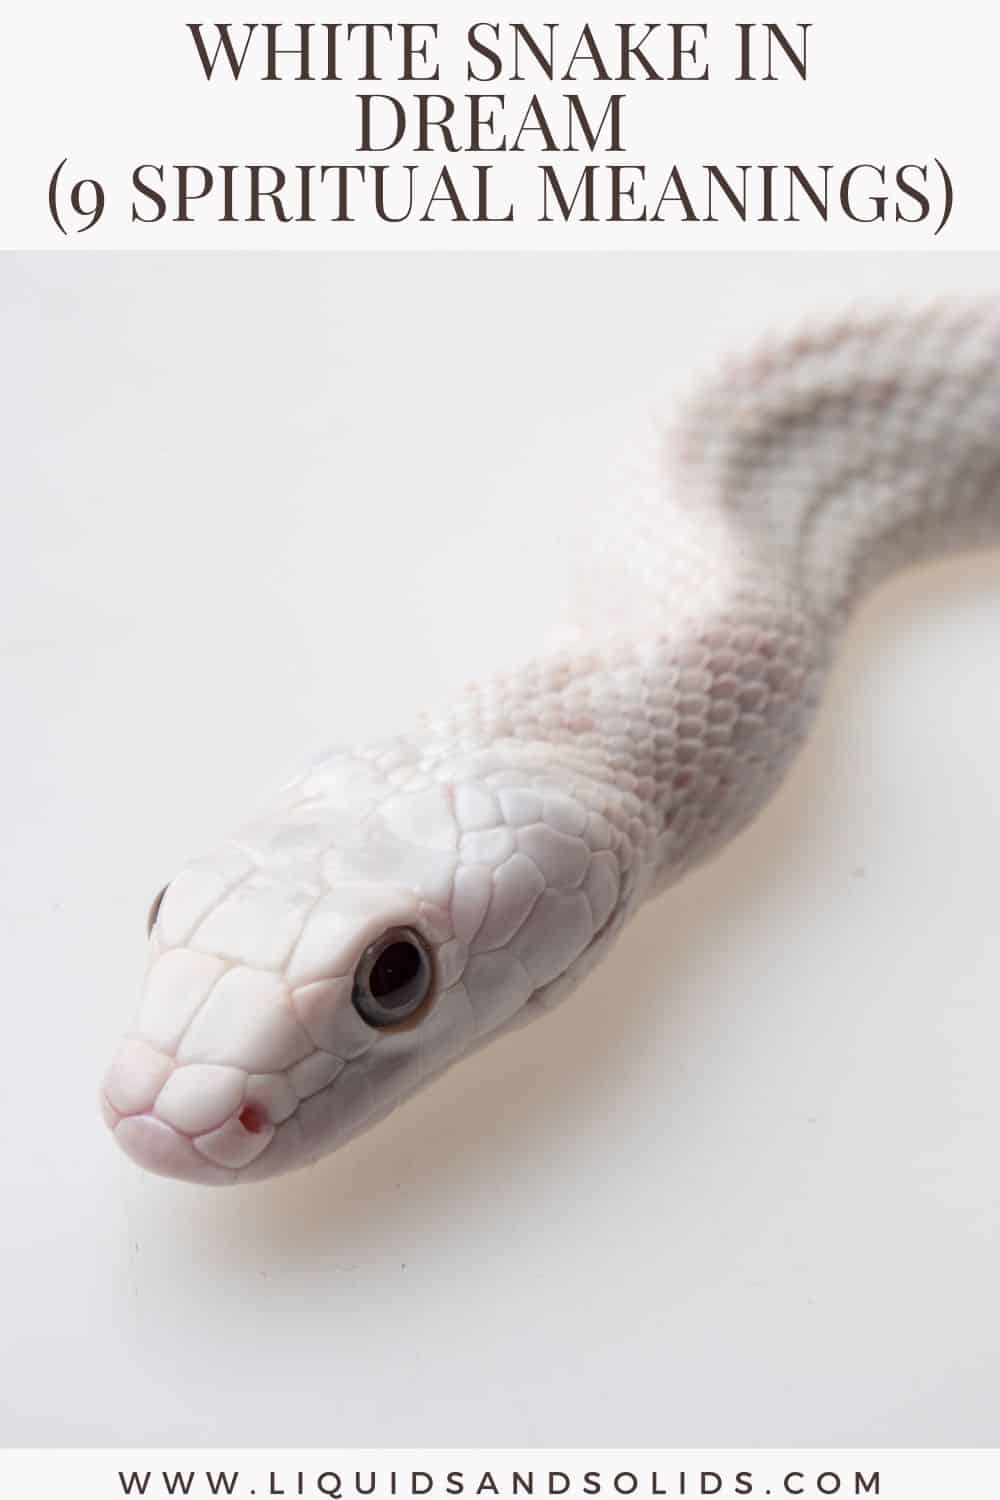  Rêve de serpent blanc (9 significations spirituelles)